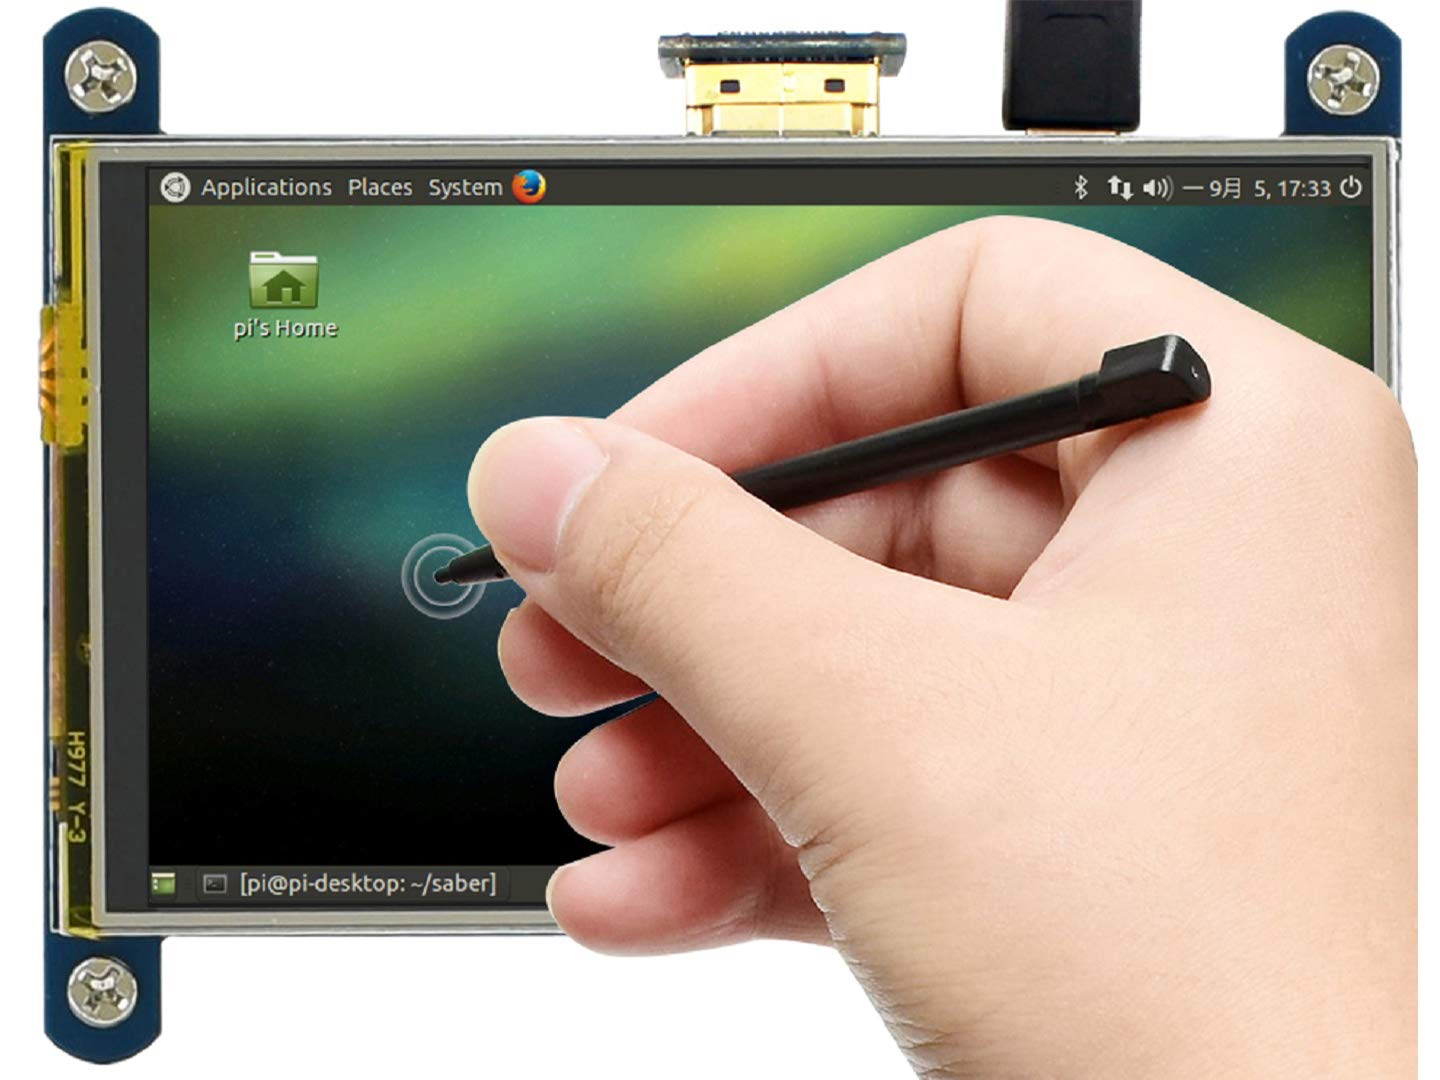 waveshare 4 inch HDMI LCD IPS Display 800x480 Resolution Resistive Touch Screen Interface for Raspberry Pi 4 B/3 B/3 B+/2 B/B+/B Zero W